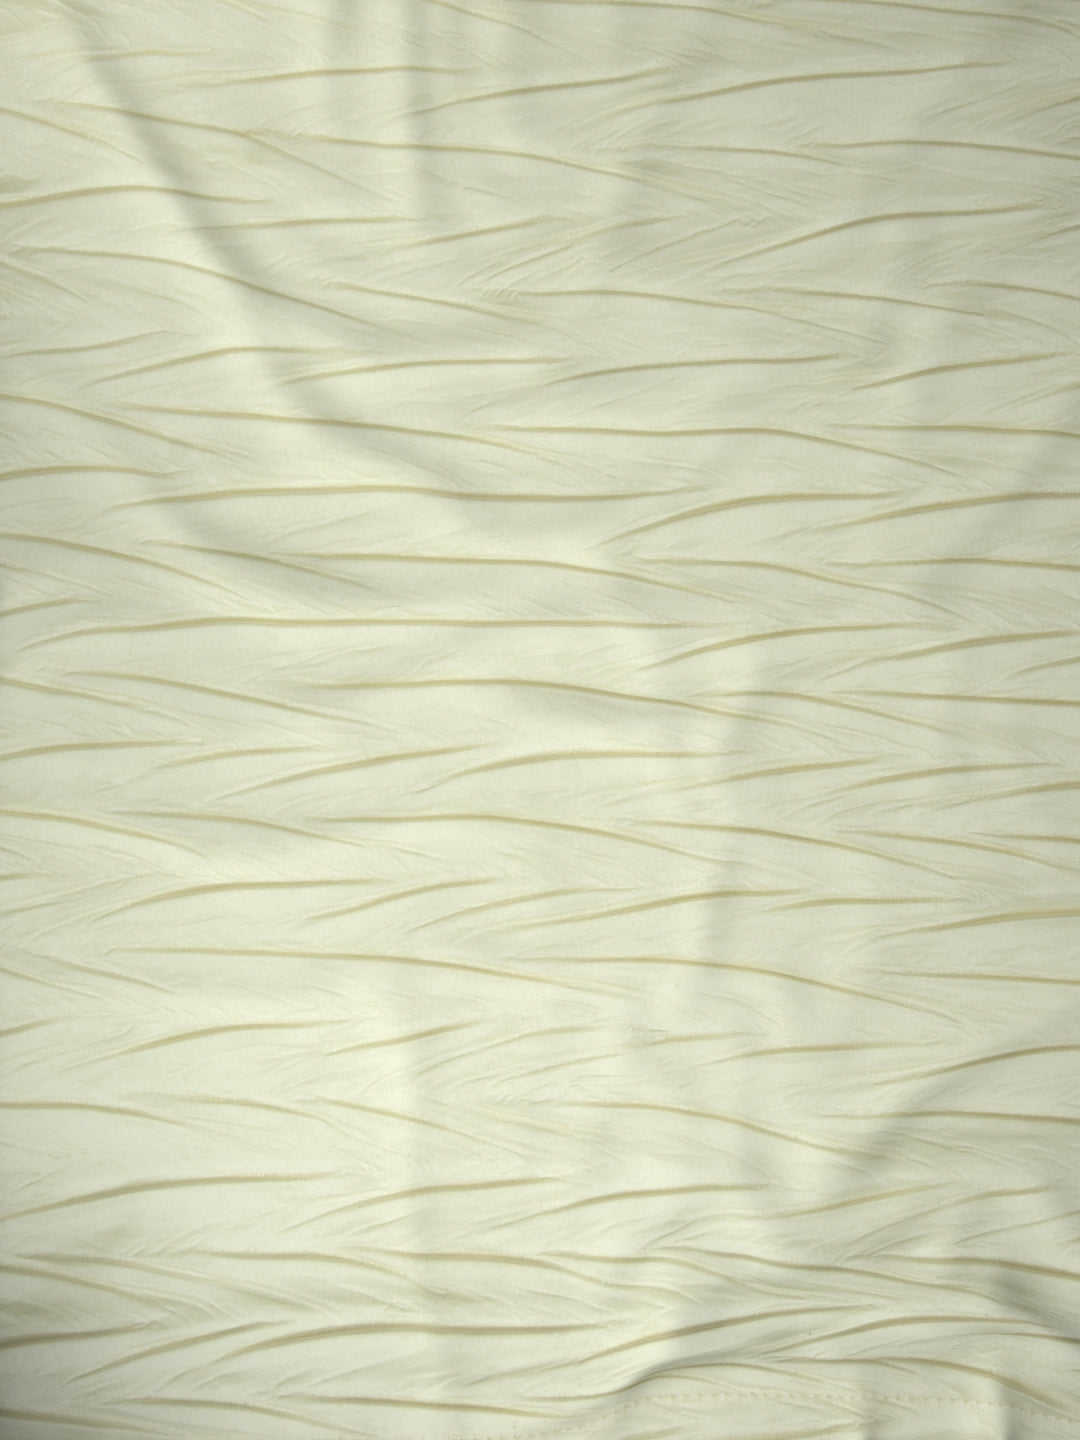 Fabric Manipulation Cushion Covers